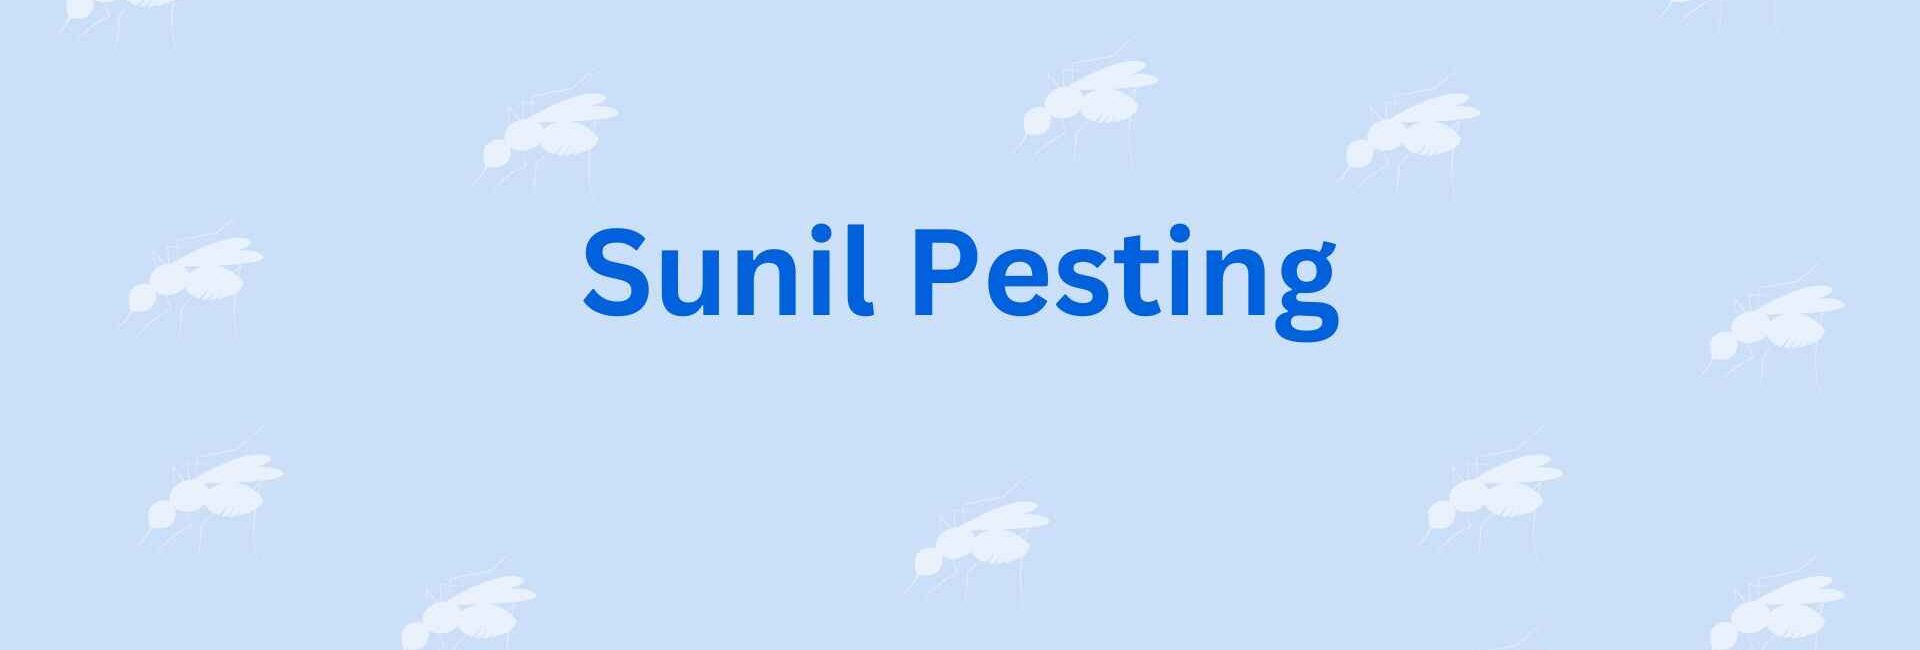 Sunil Pesting - Pest Control Service in Noida